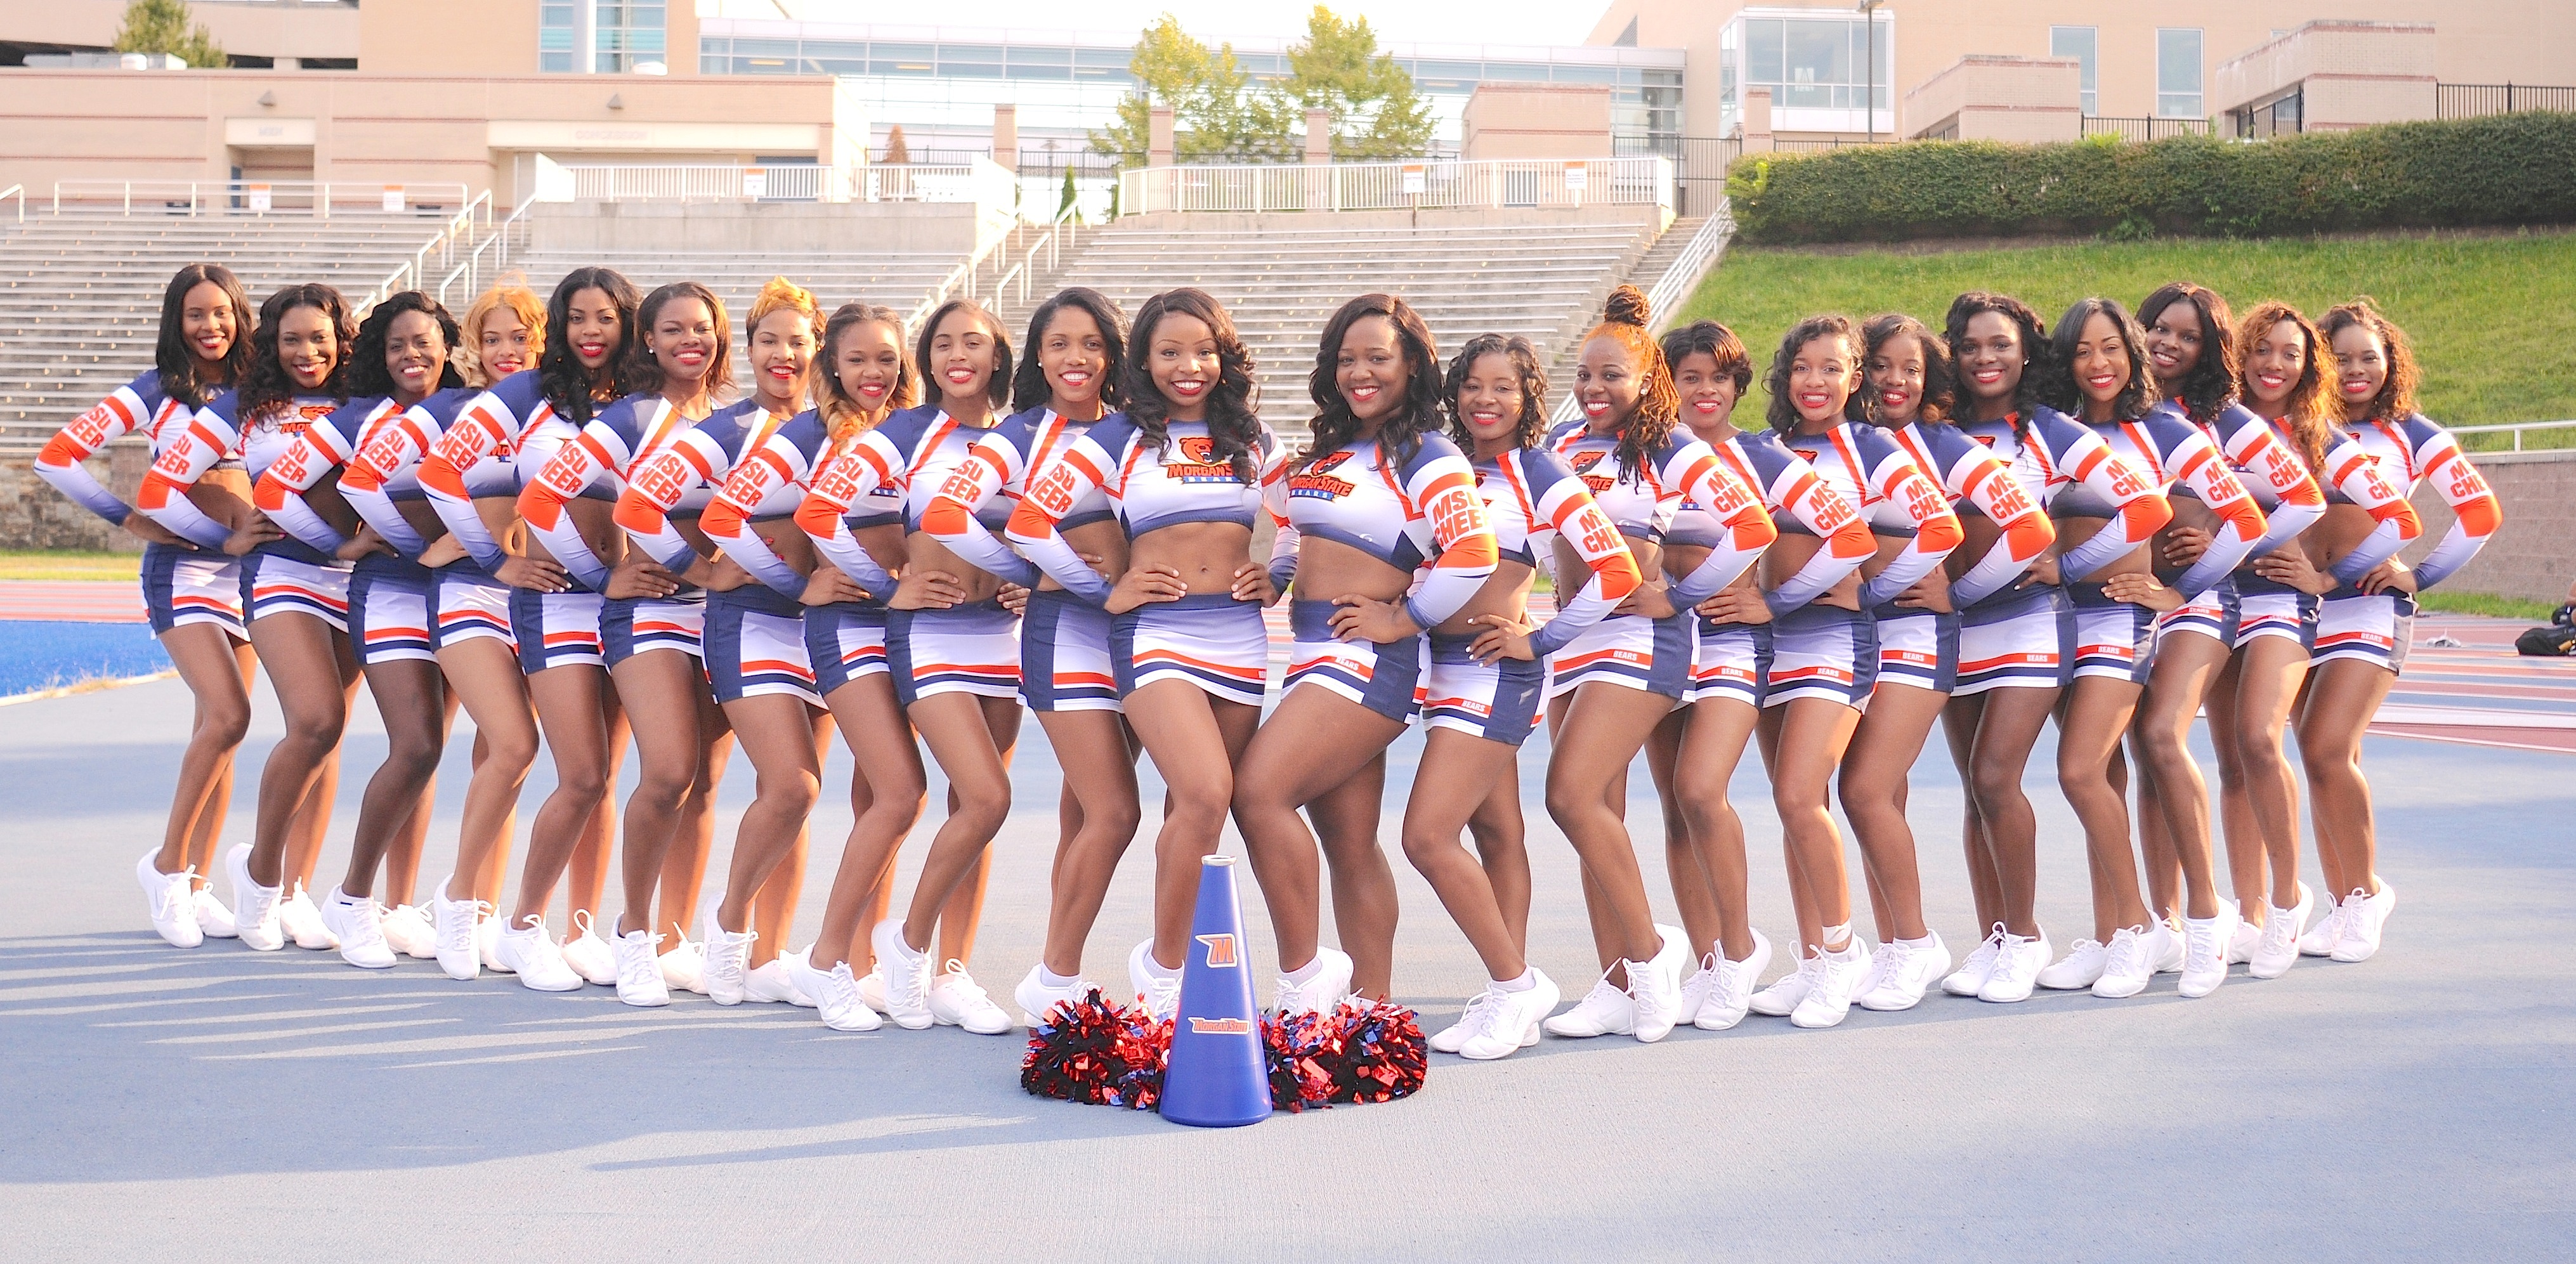 Morgan State University Cheerleading Team. 